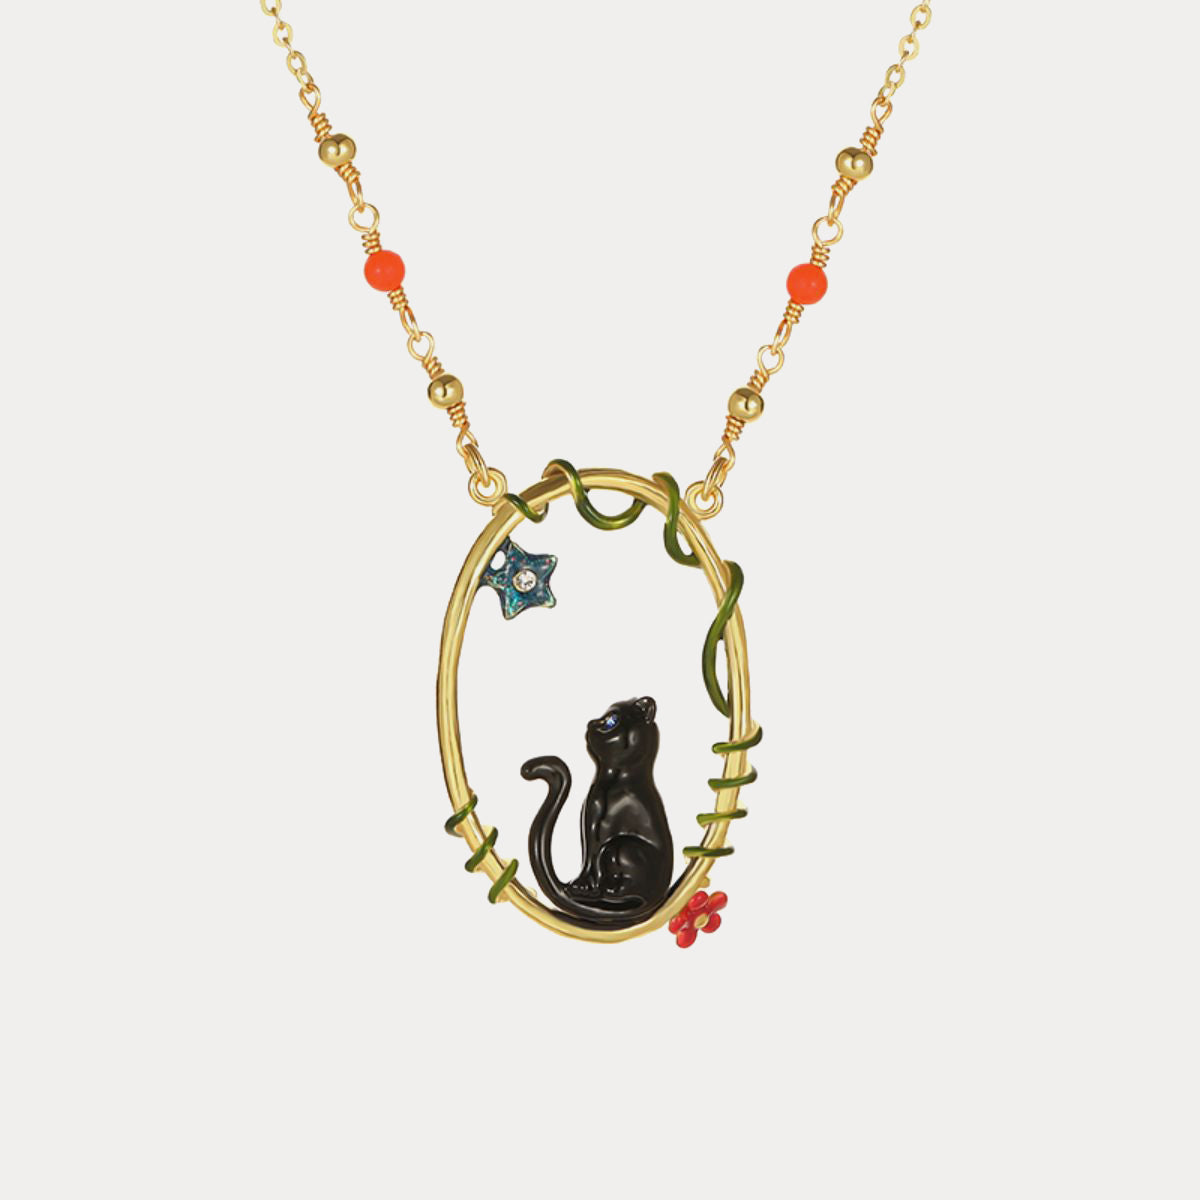 Selenichast black cat necklace